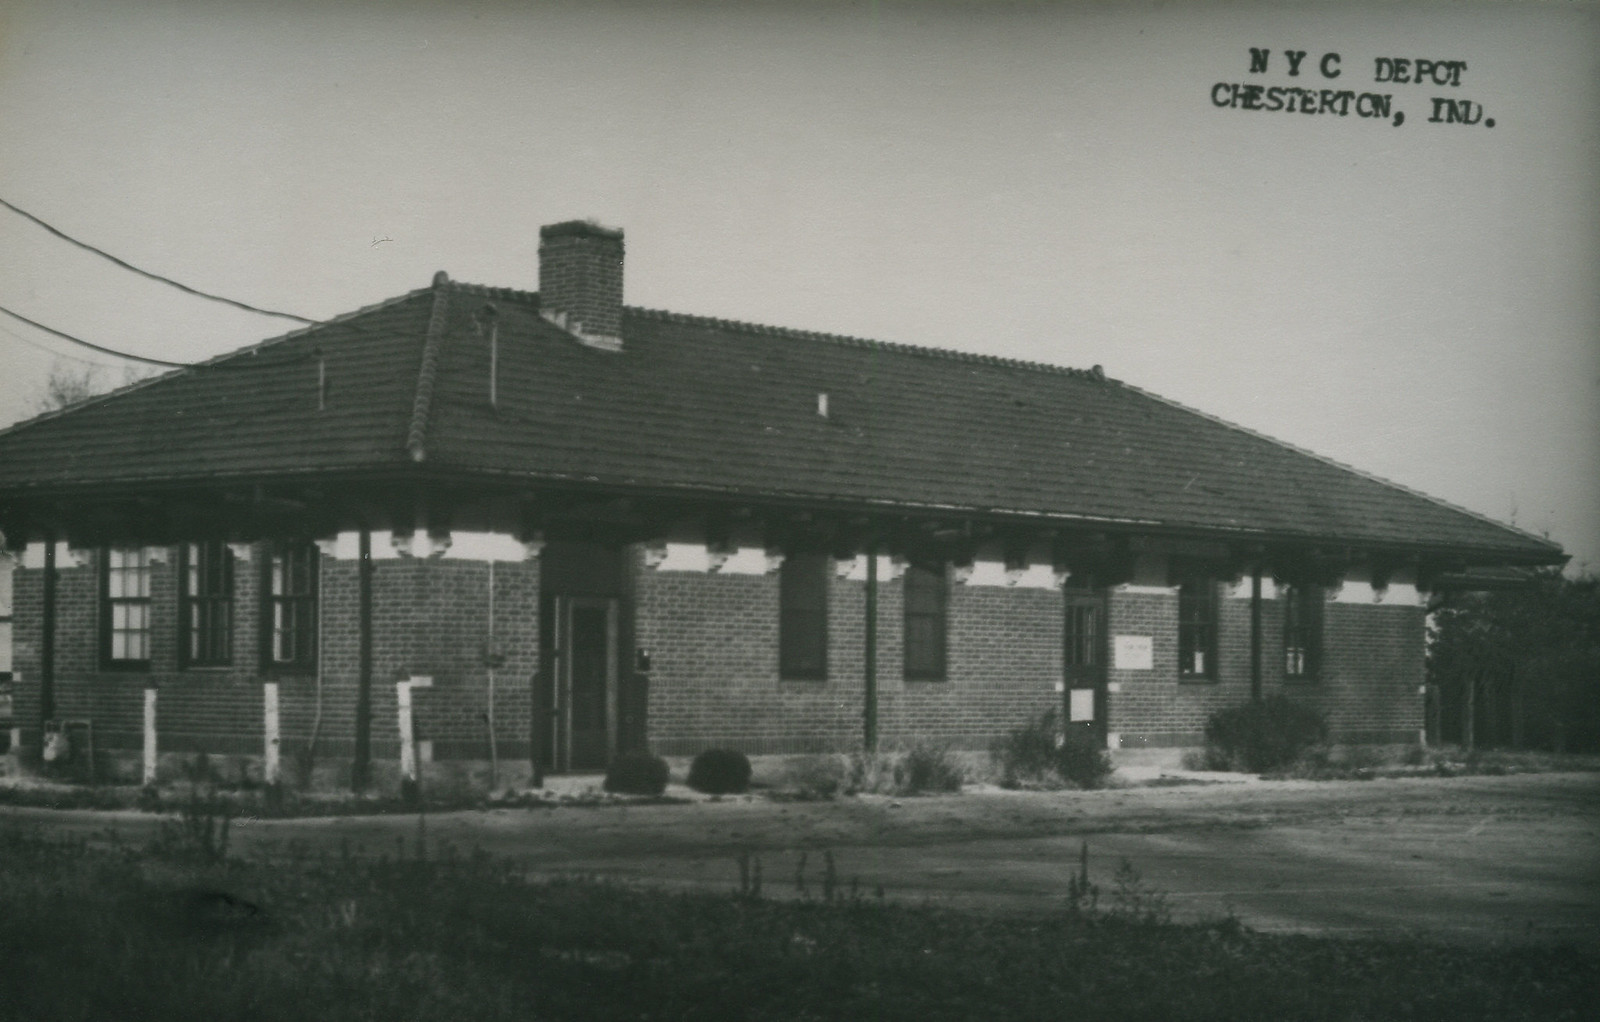 New York Central Railroad Depot, circa 1965 - Chesterton, Indiana